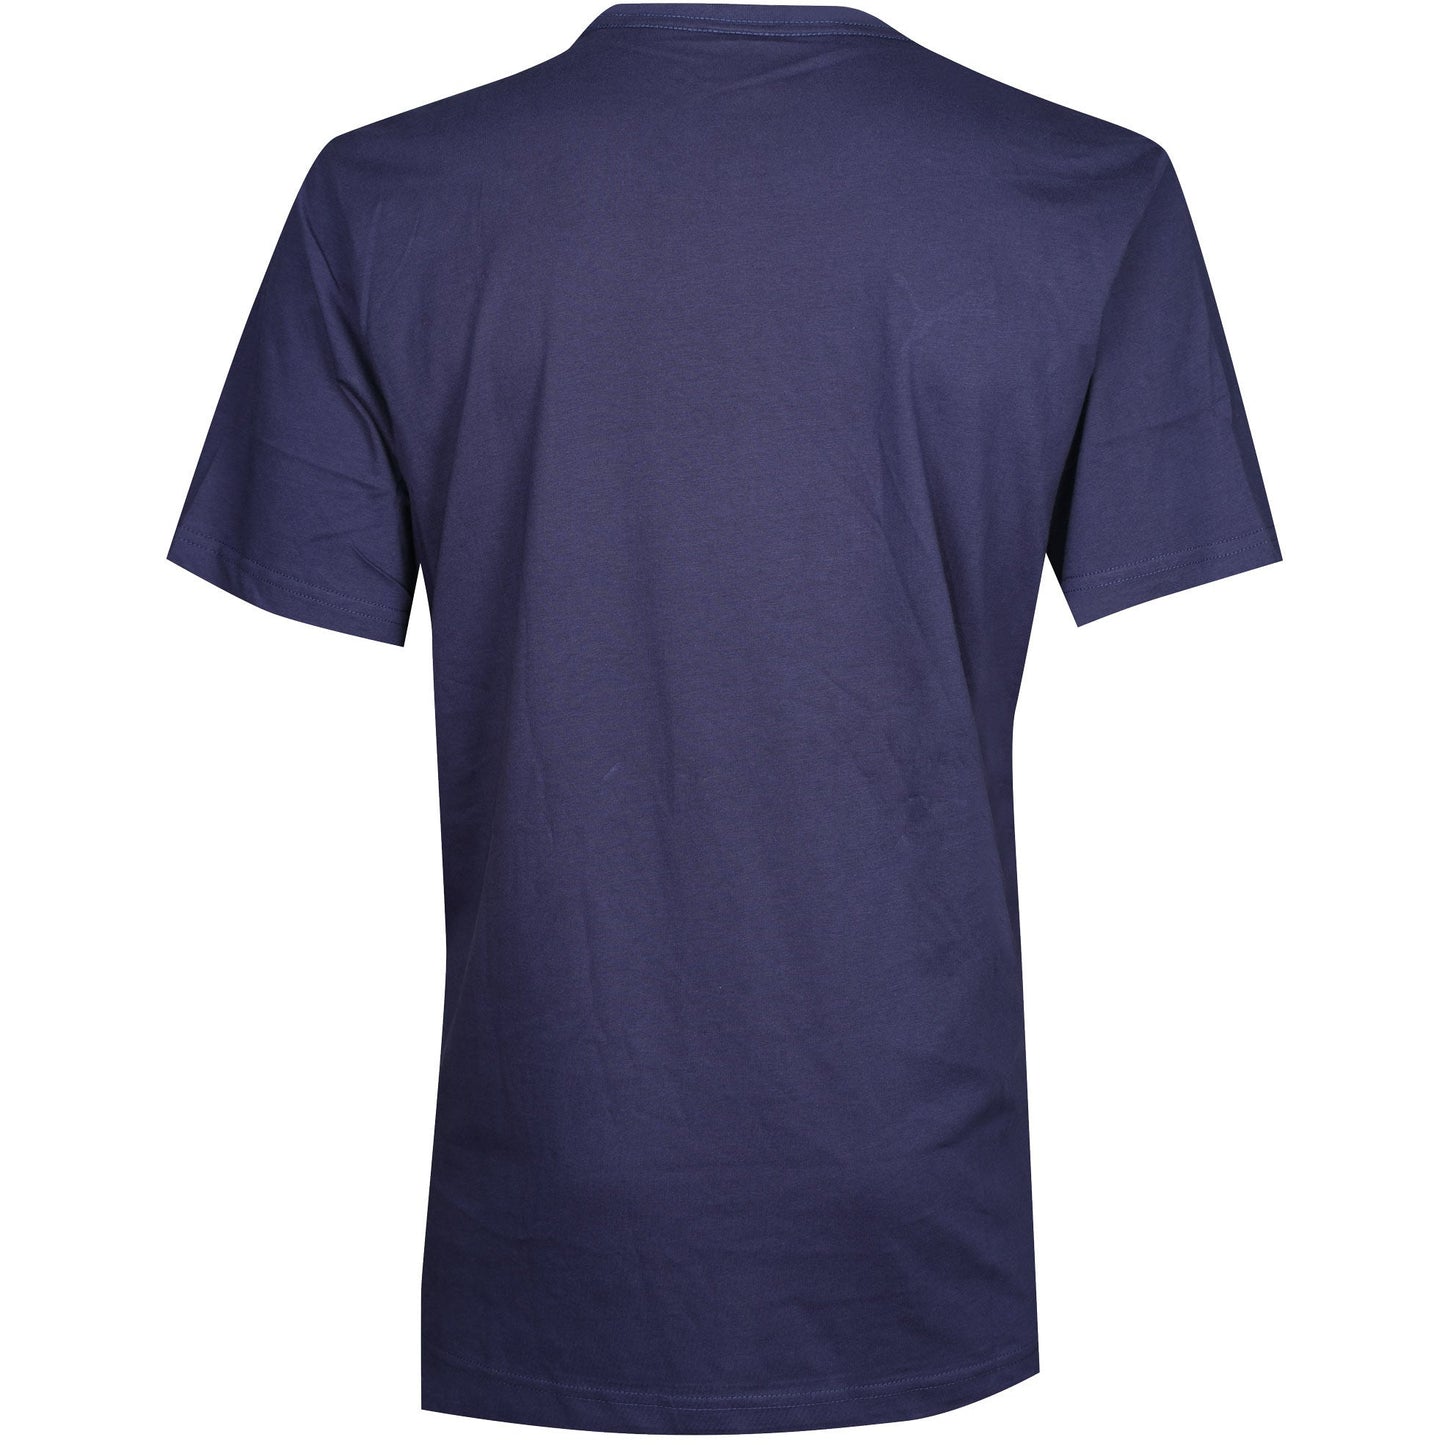 Puma Holstein Kiel T-Shirt blau 22/23